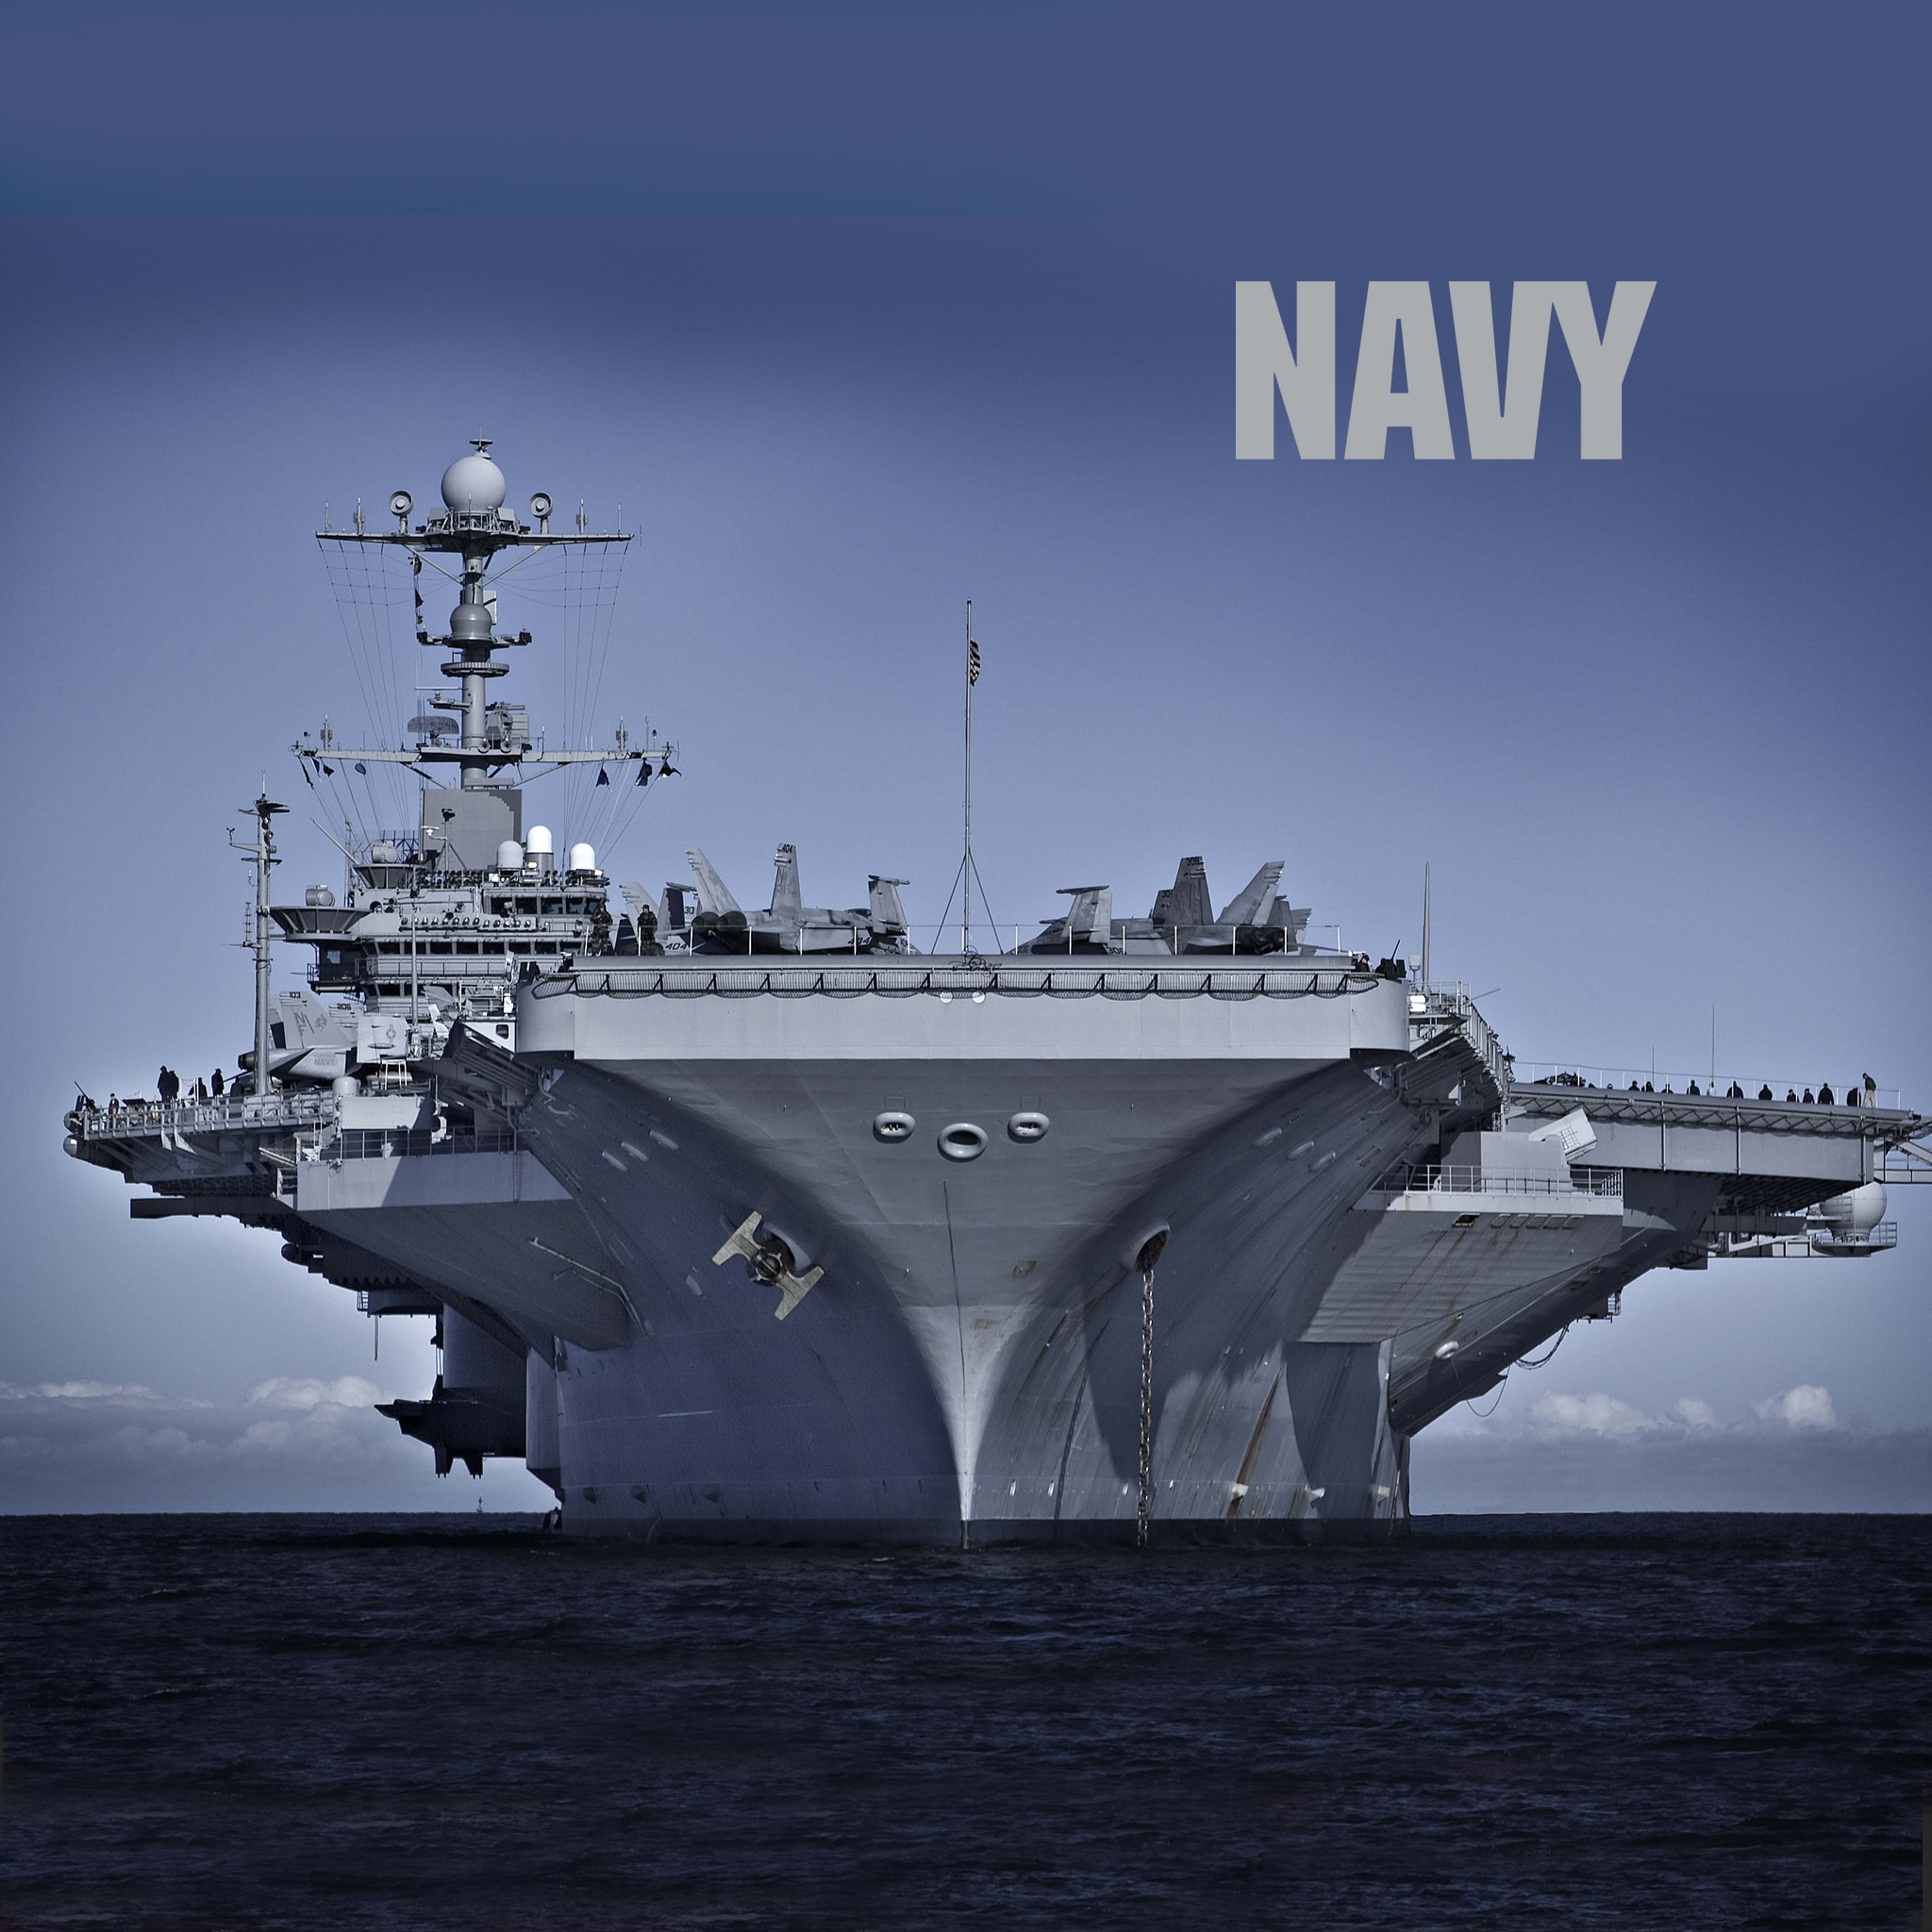 United States Navy iPhone Wallpaper - WallpaperSafari2048 x 2048